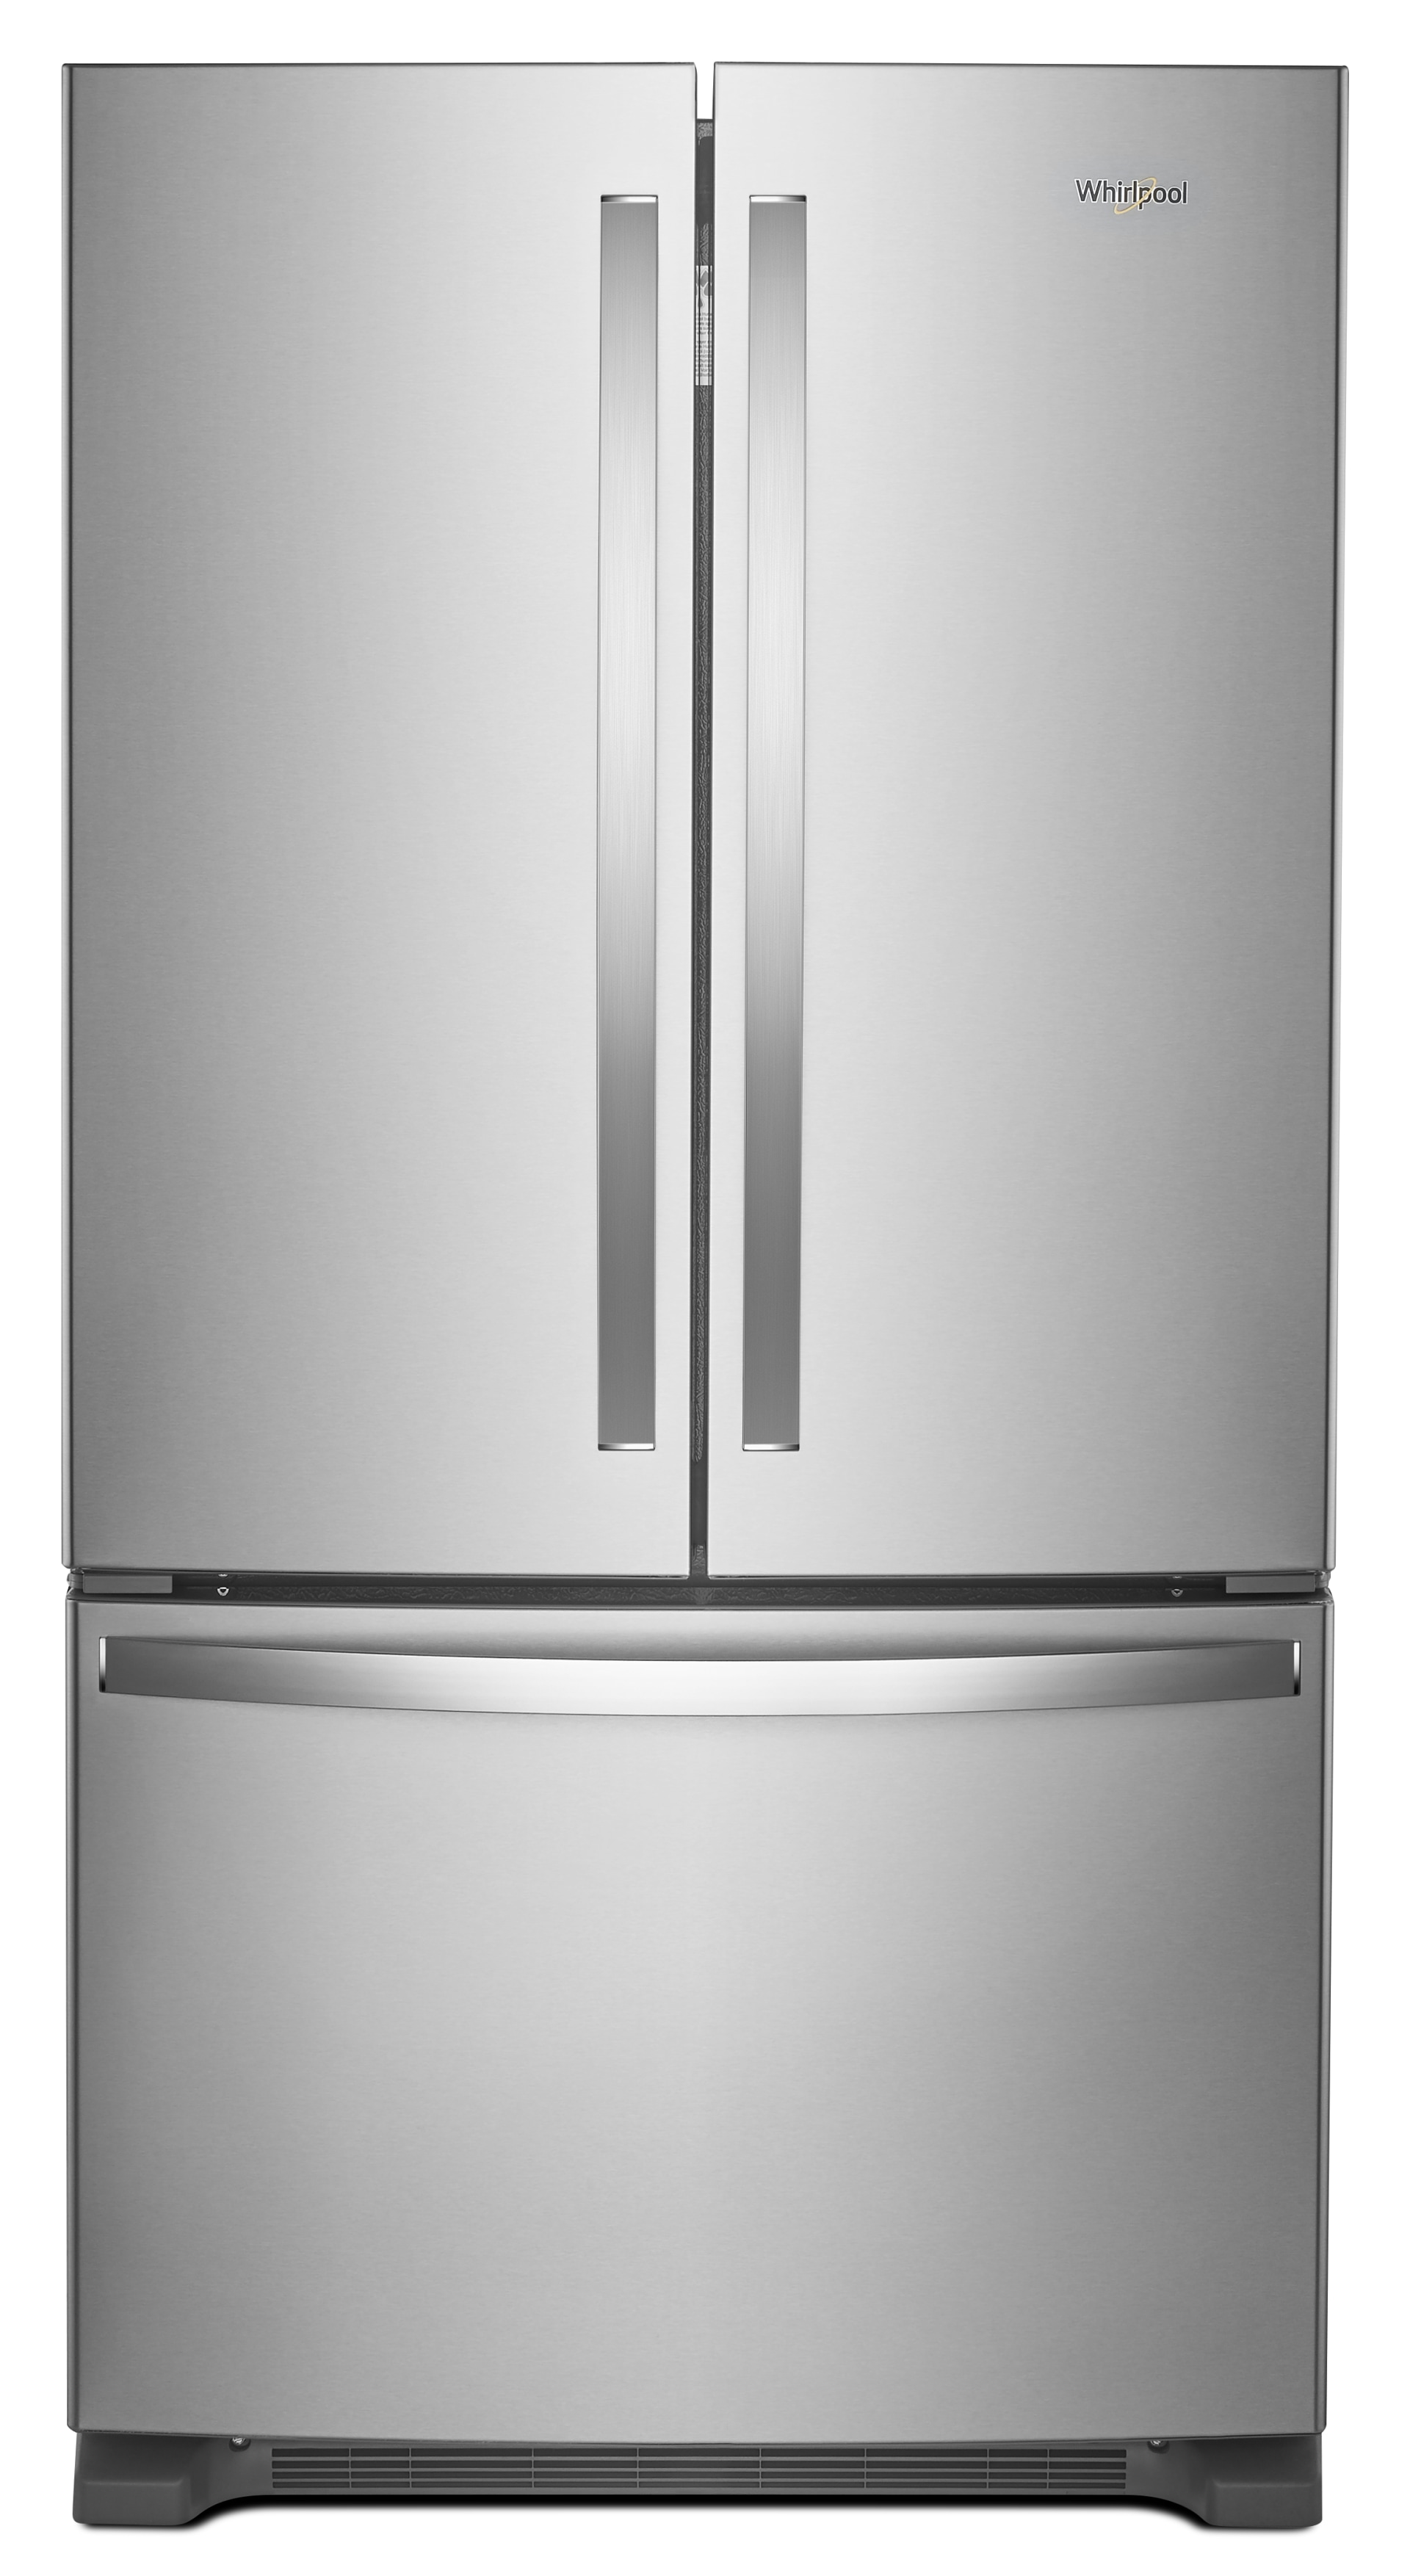 Wrf535smhz Whirlpool 36 Inch Wide French Door Refrigerator With Crisper Drawer 25 Cu Ft Fingerprint Resistant Stainless Steel Manuel Joseph Appliance Center